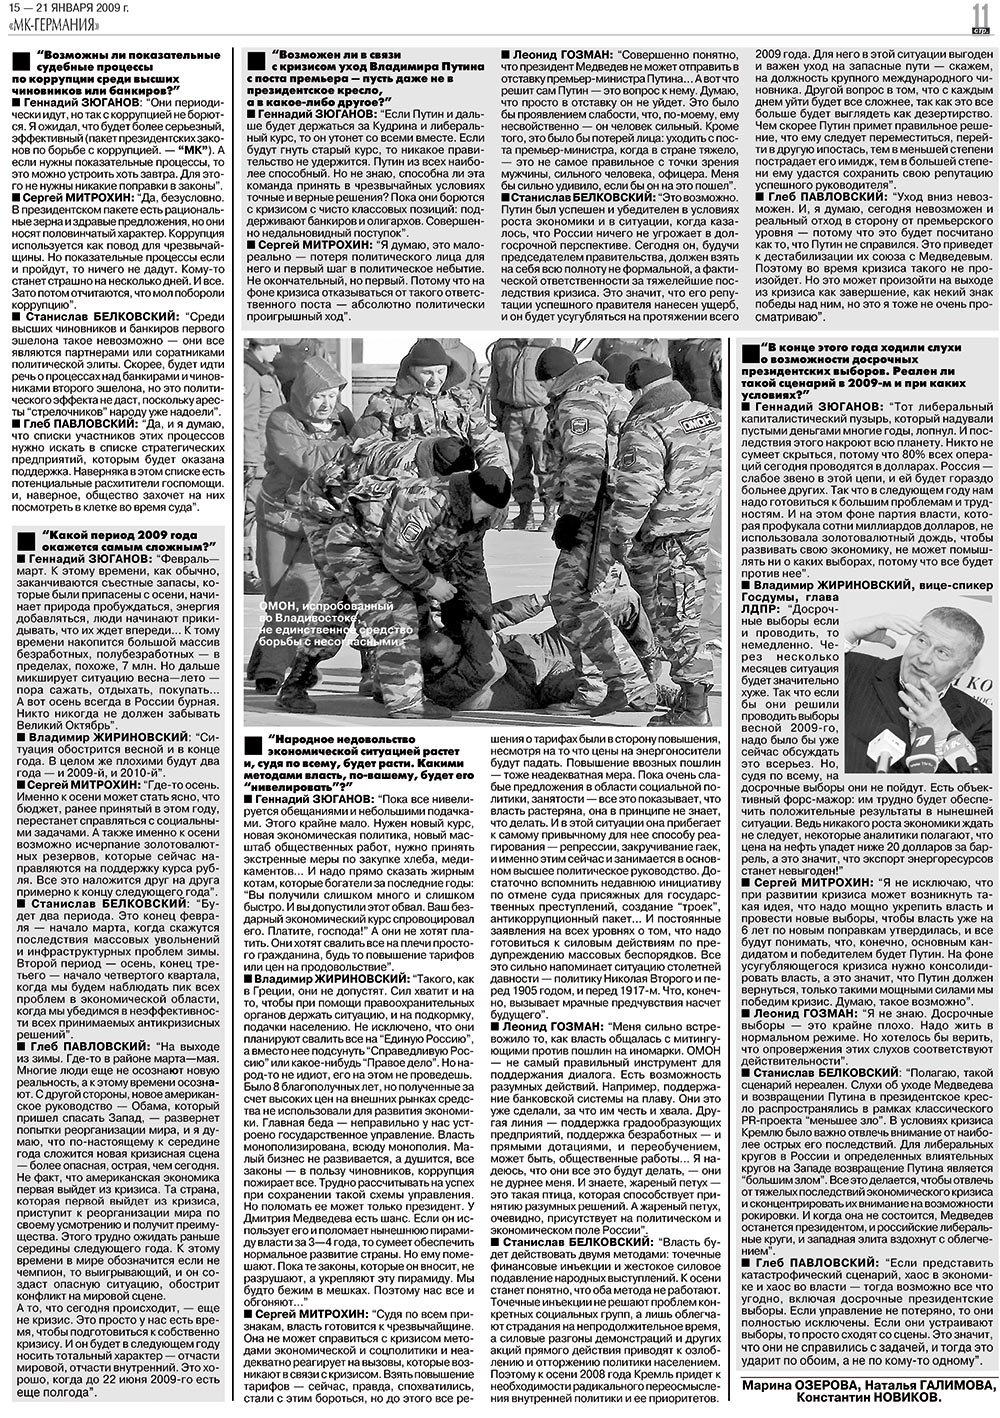 МК-Германия, газета. 2009 №3 стр.11